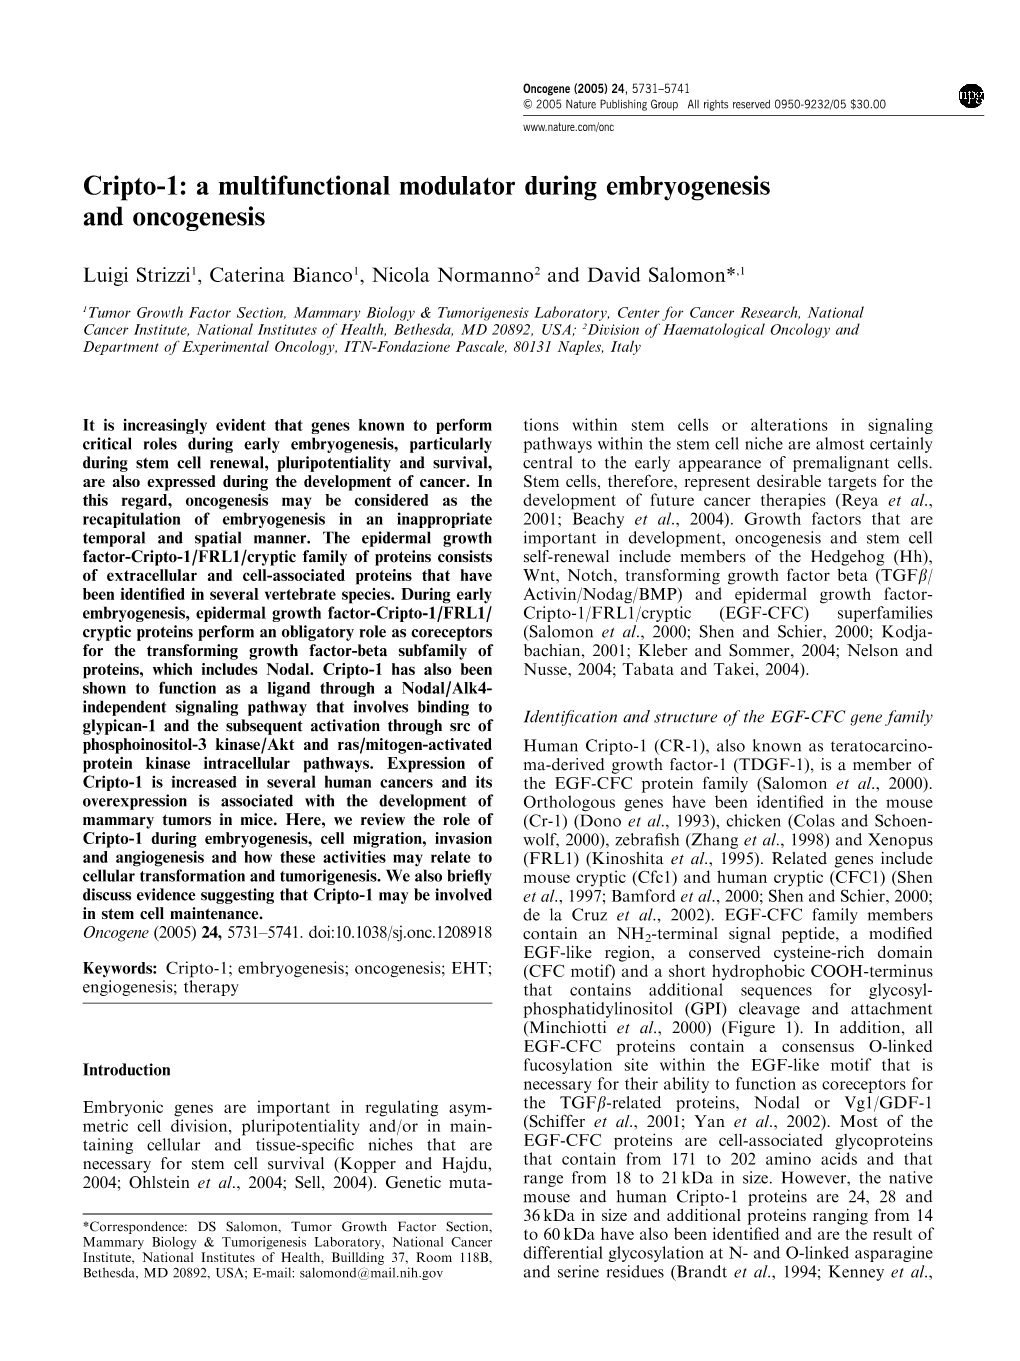 Cripto-1: a Multifunctional Modulator During Embryogenesis and Oncogenesis